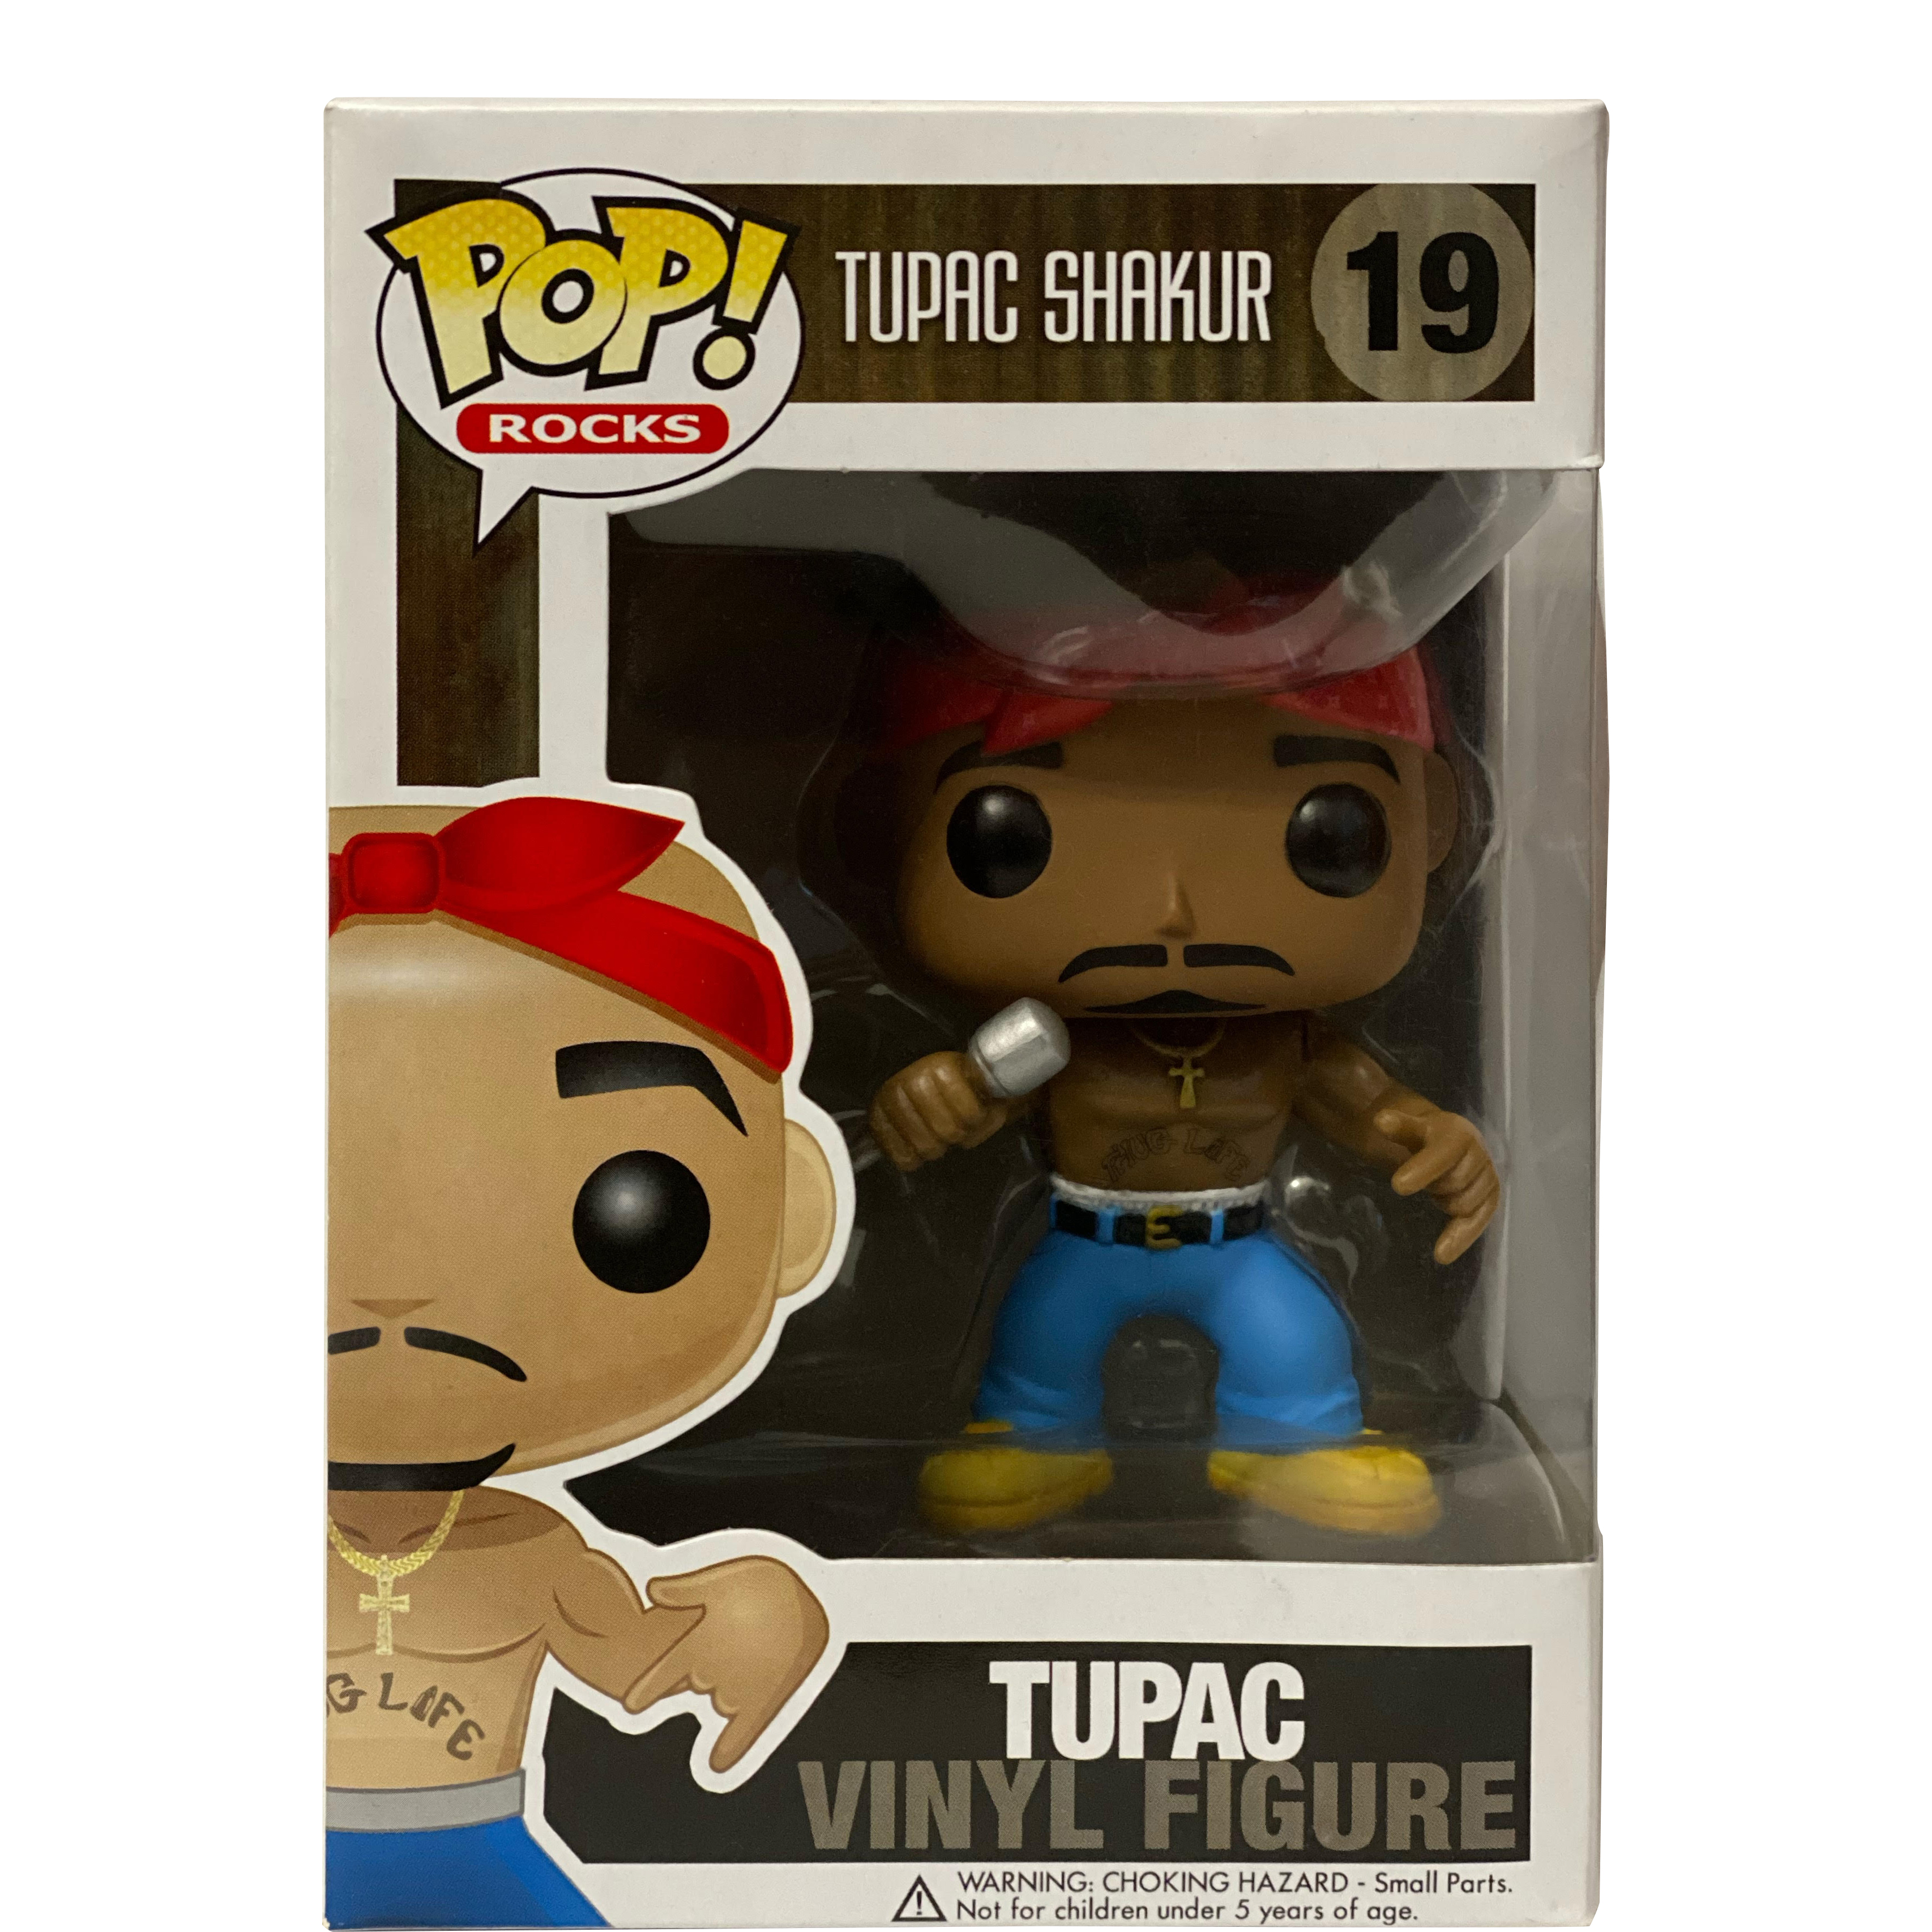 Funko Pop Rocks TUPAC SHAKUR #19 FIGURE Collection Jouets # 2PAC # 19 